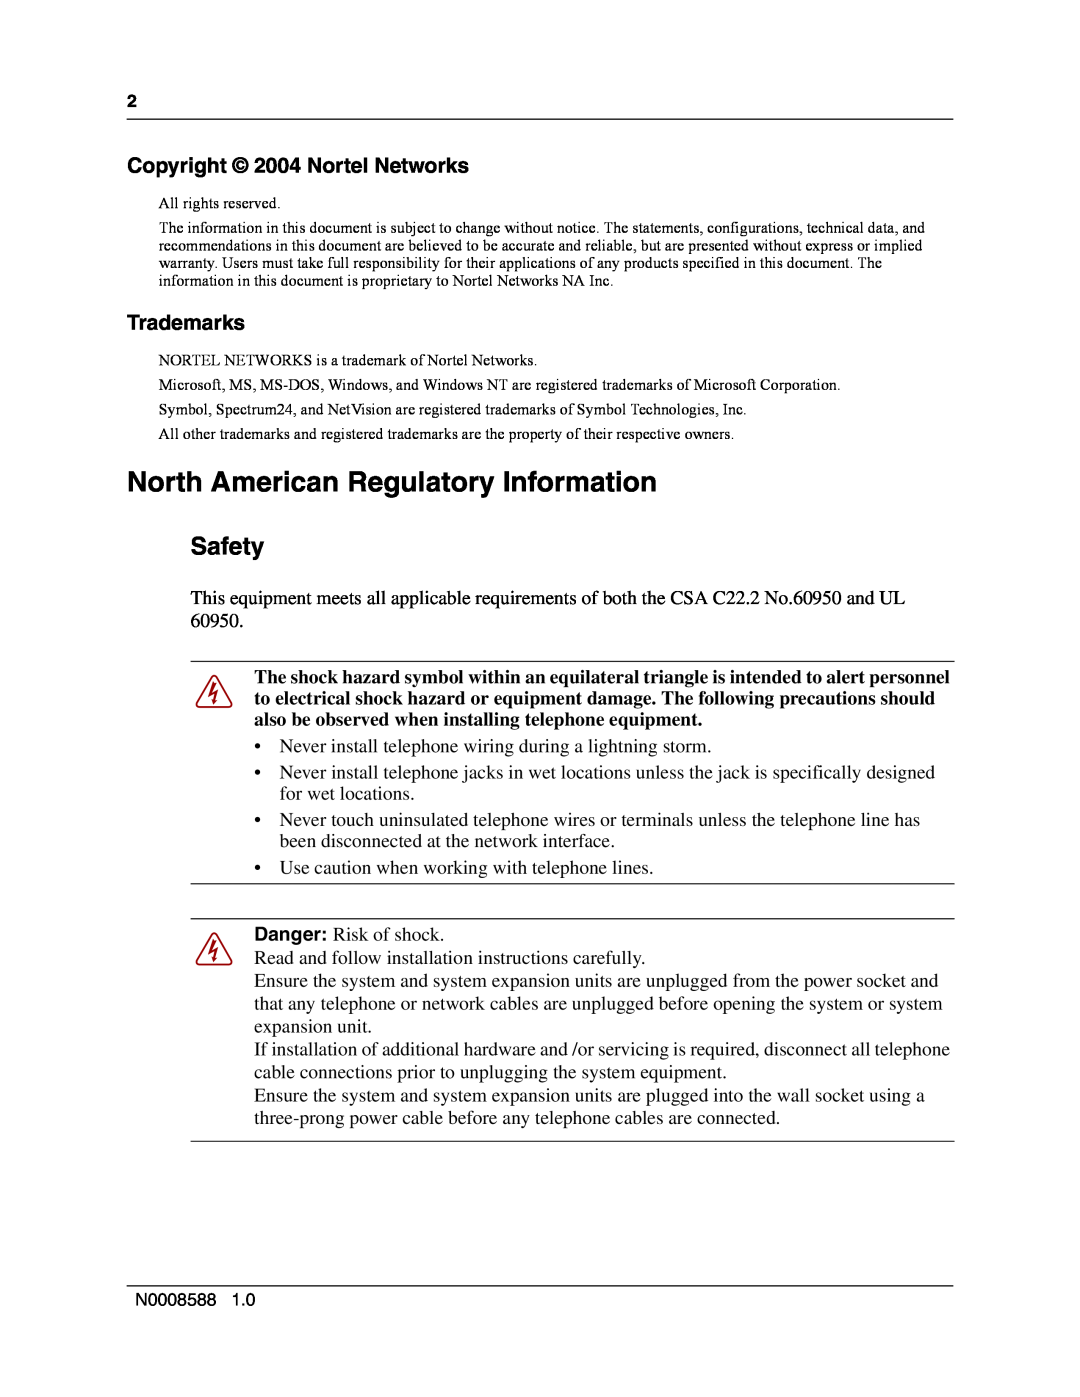 Nortel Networks MOG7xx, MOG6xx North American Regulatory Information, Safety, Copyright 2004 Nortel Networks, Trademarks 